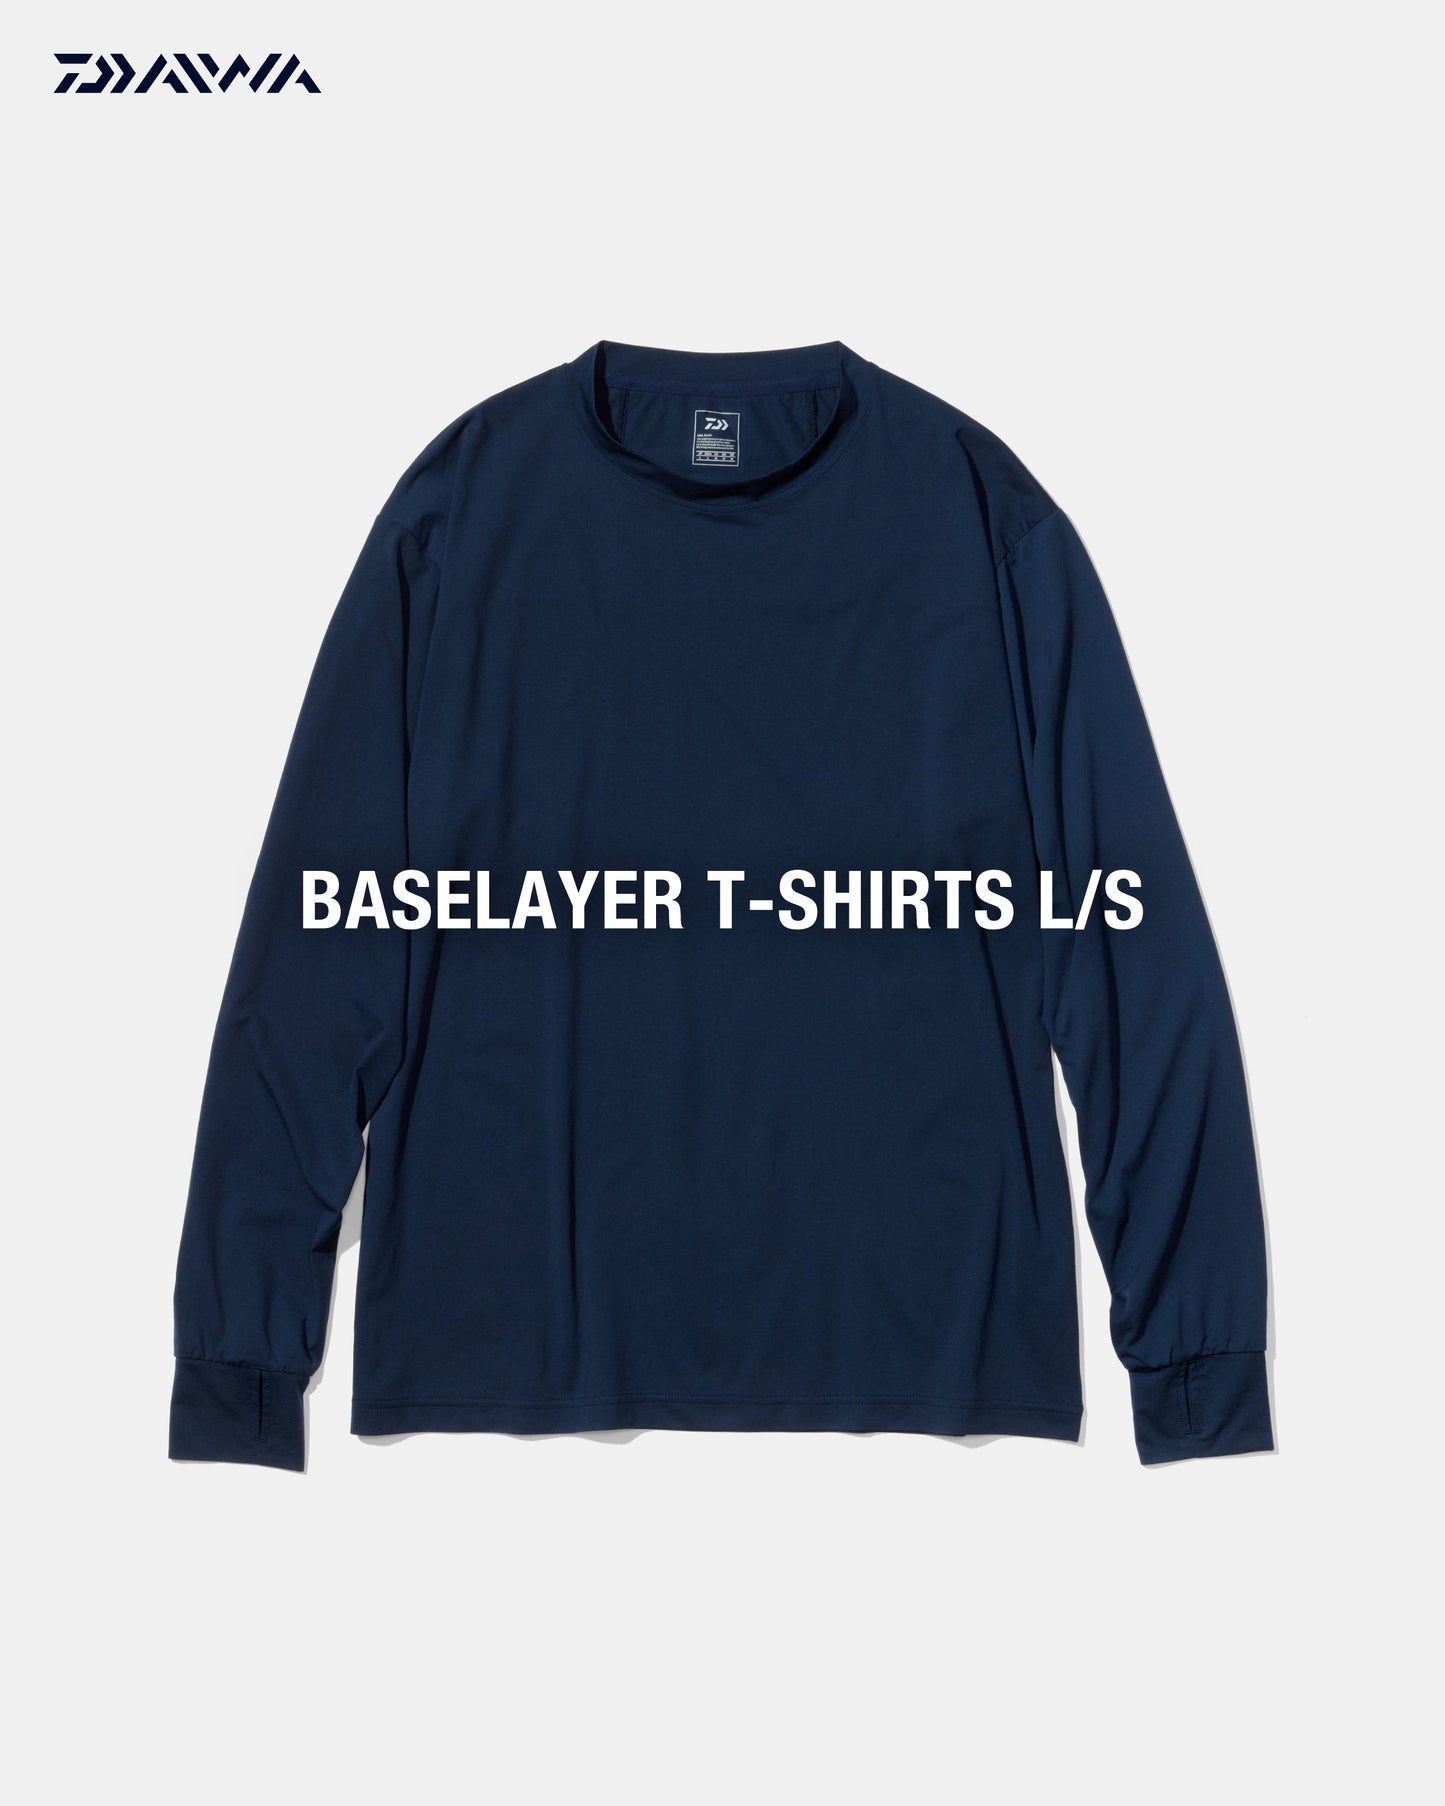 BASELAYER T-SHIRTS L/S